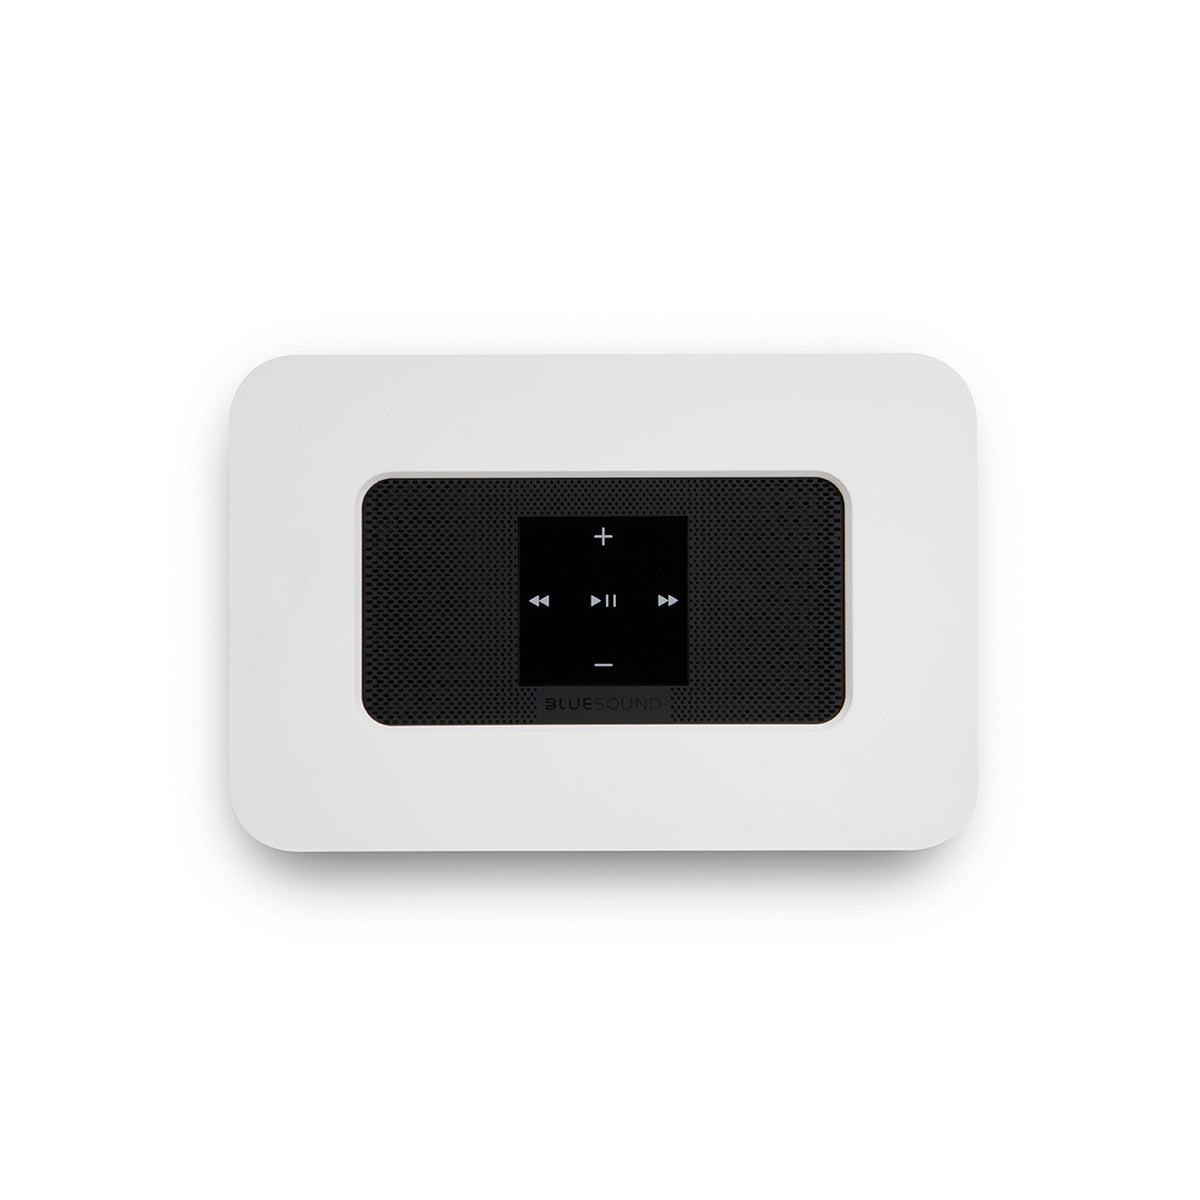 Bluesound NODE (N130) Wireless Multi-Room Hi-Res Music Streamer - Black - The Audio Experts